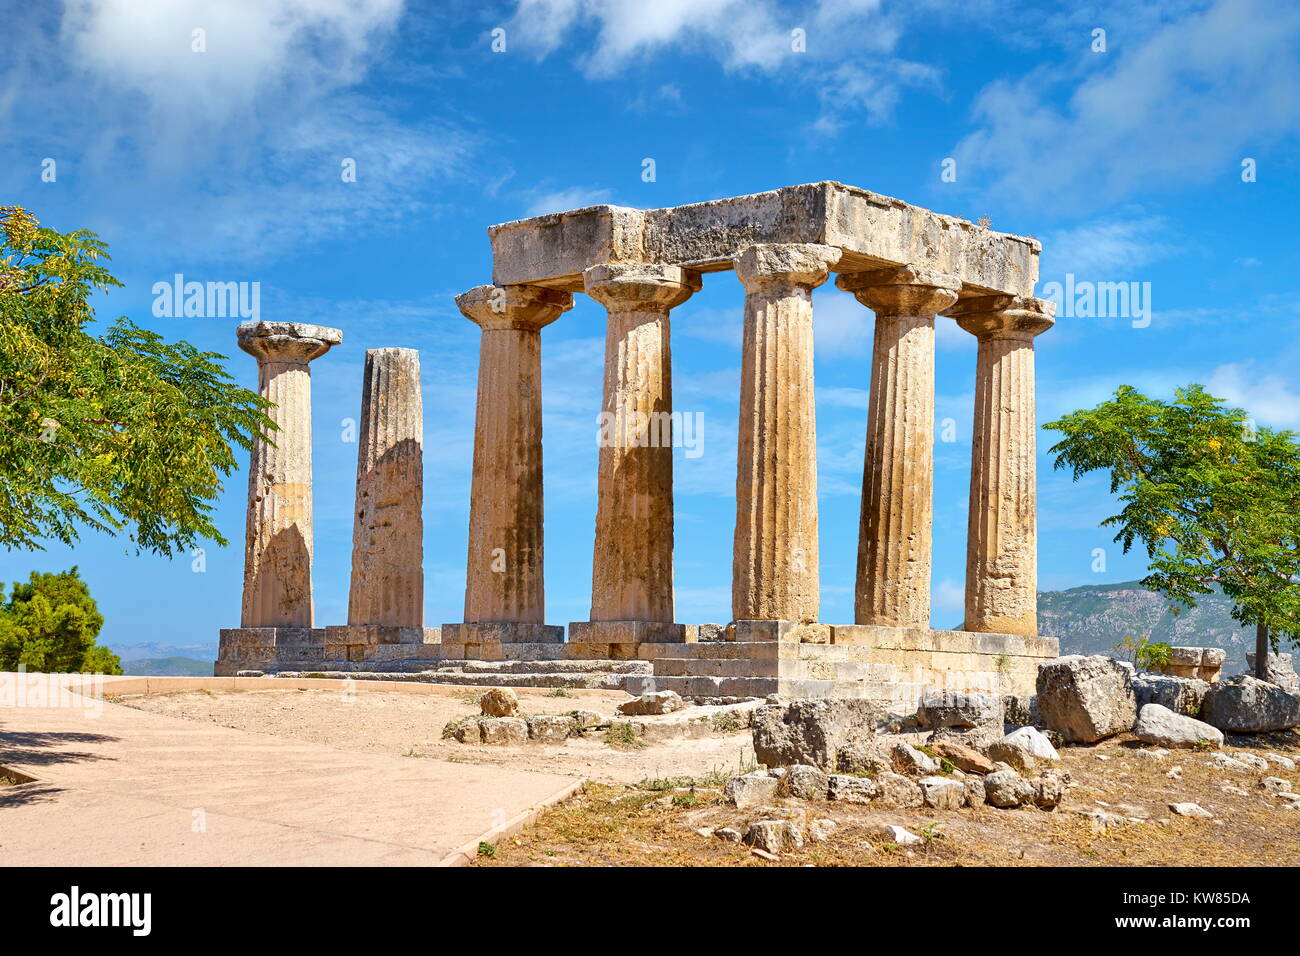 The Temple of Apollo, ancient Corinth, Greece Stock Photo